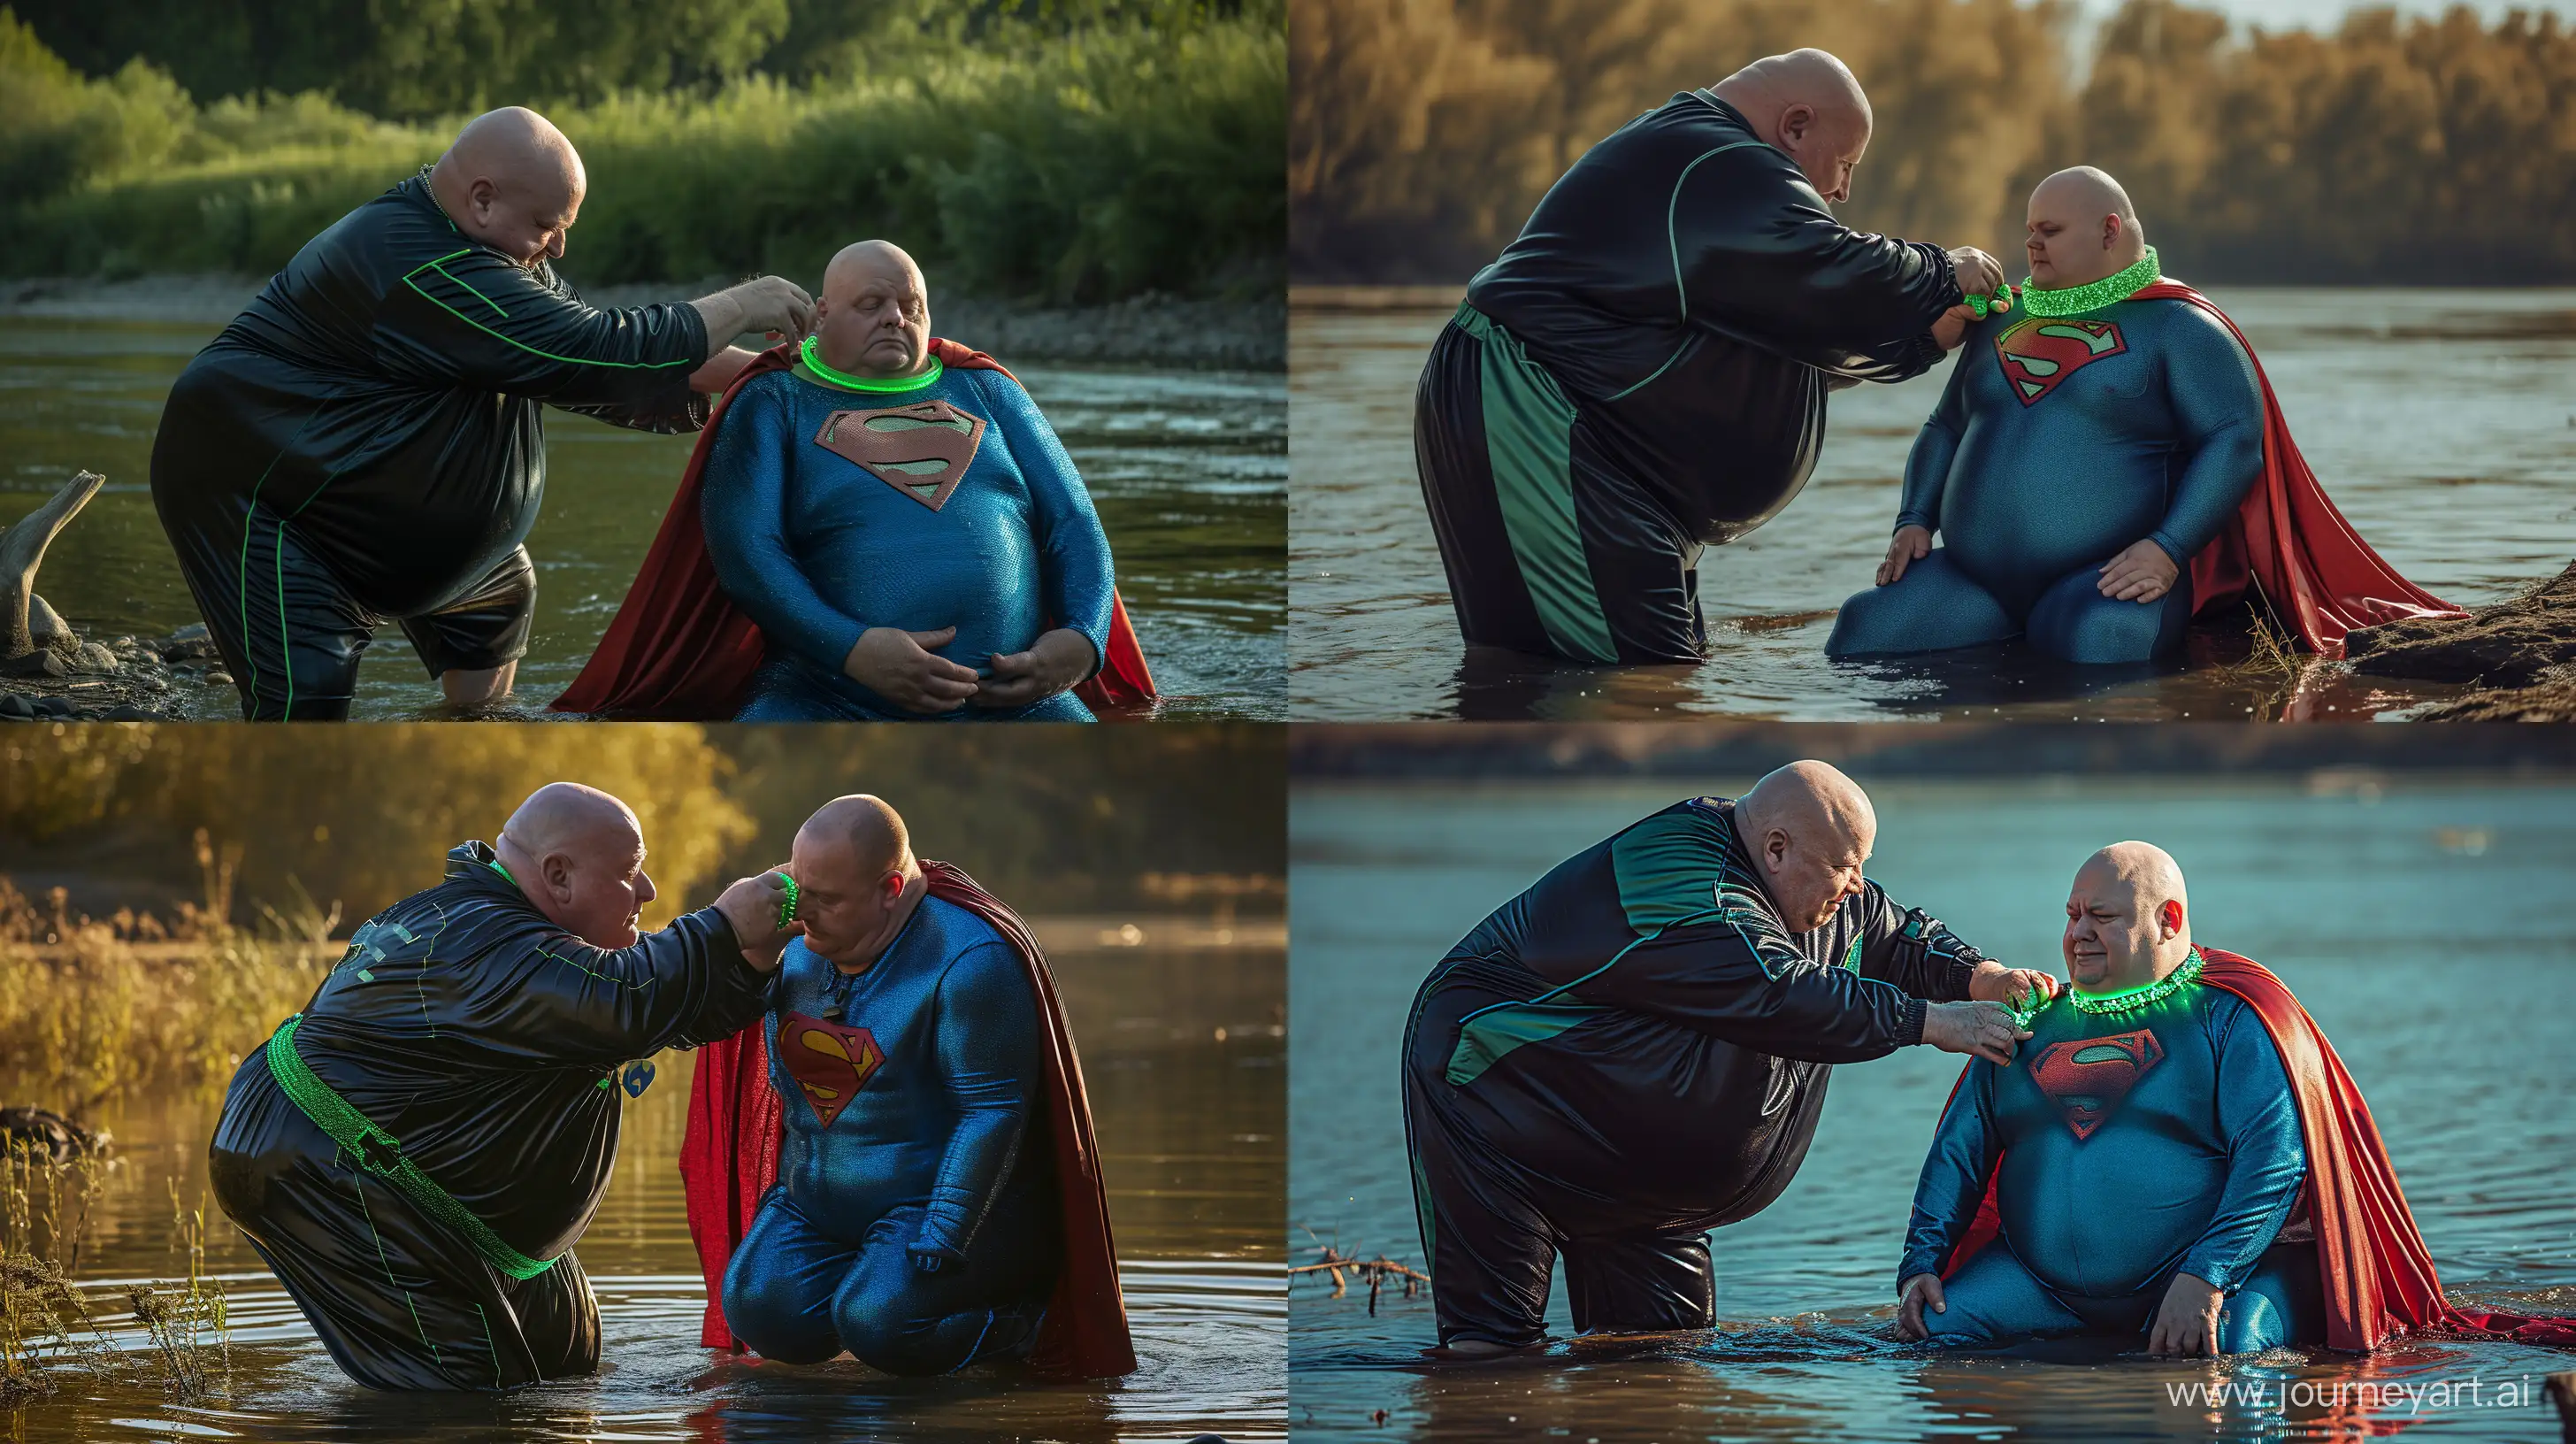 Elderly-Superhero-in-Glowing-Attire-Adjusting-Collar-by-the-River